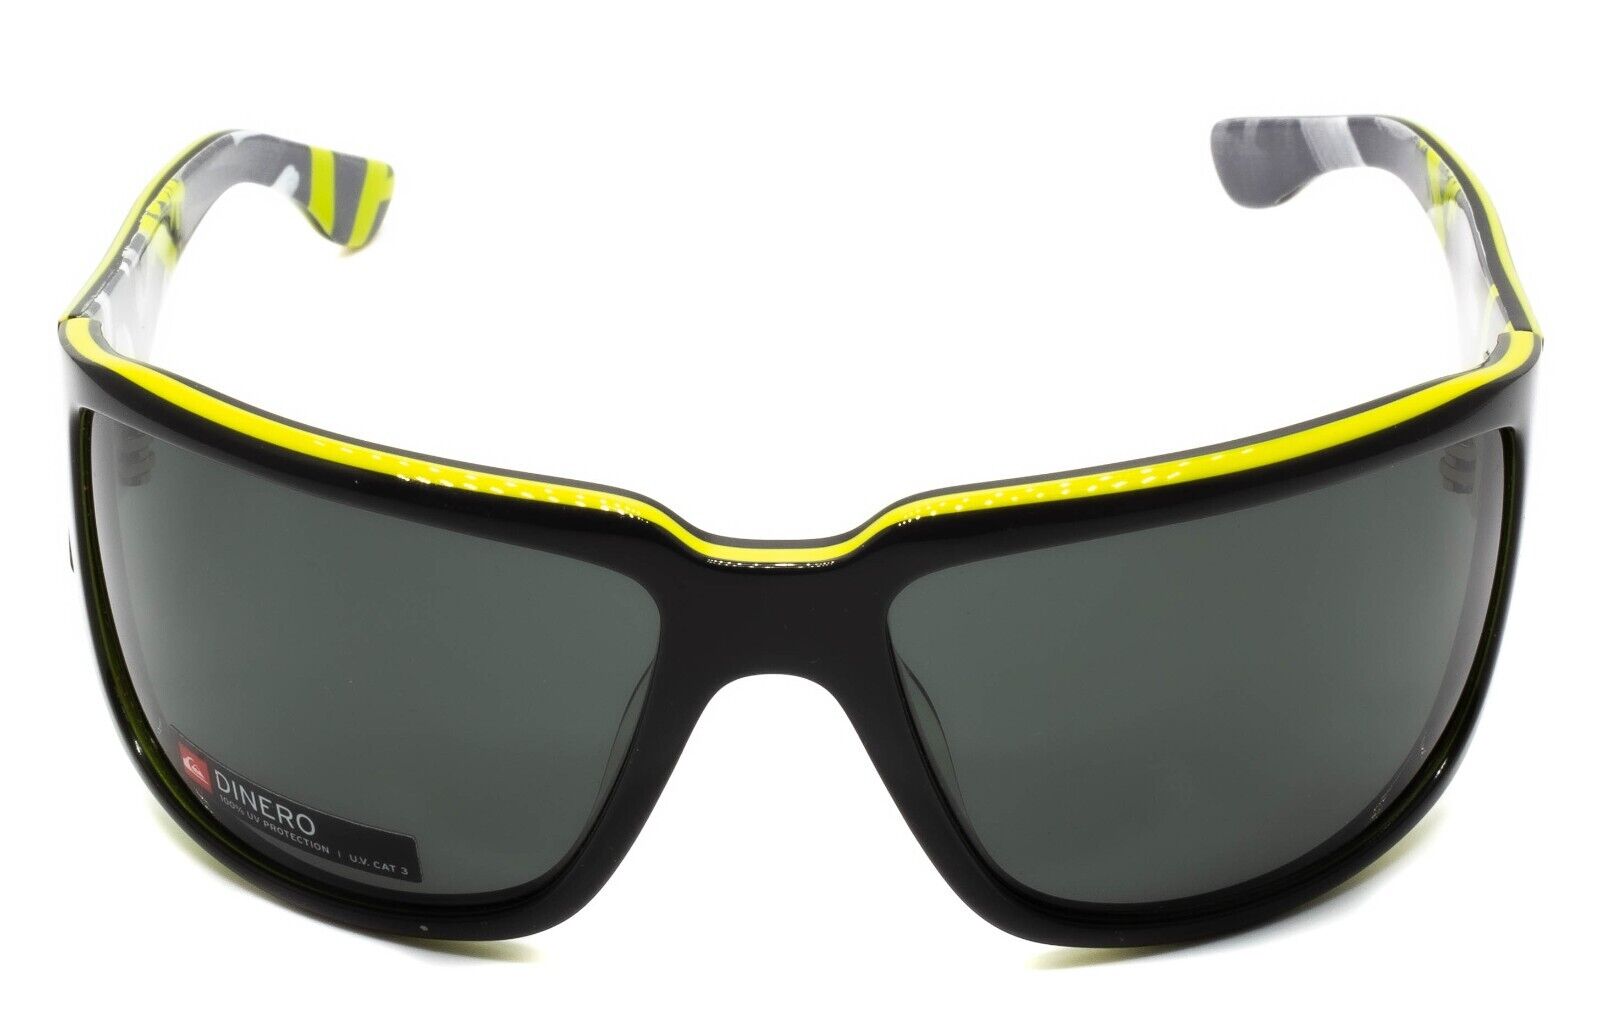 QUIKSILVER DINERO Glasses Eyewear Sunglasses UV CAT EQS1104/XSSG GGV 3 64mm Eyewear - Shades